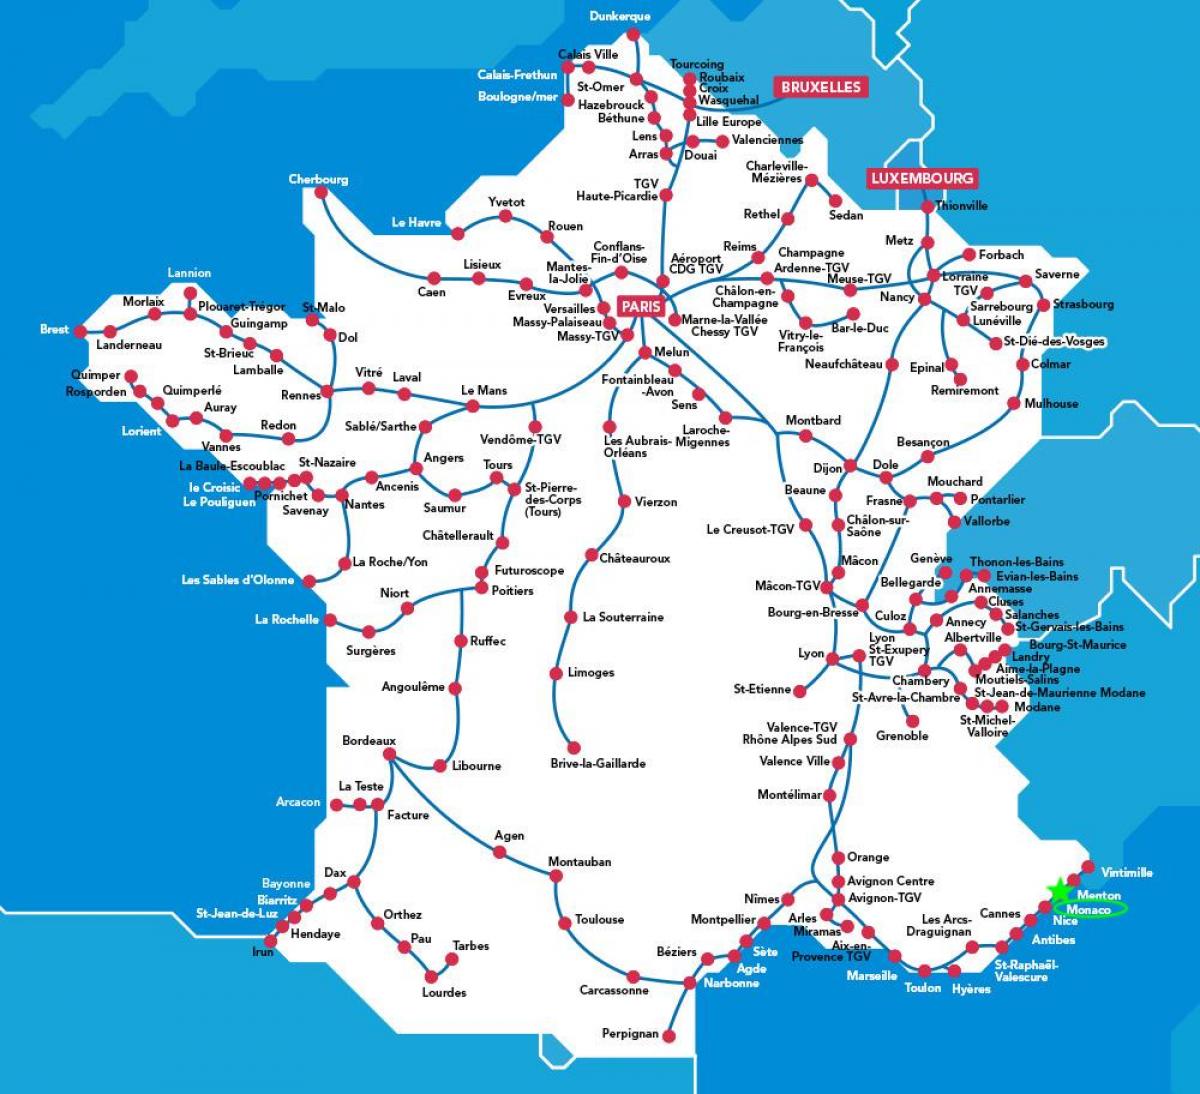 Monaco railway stations map